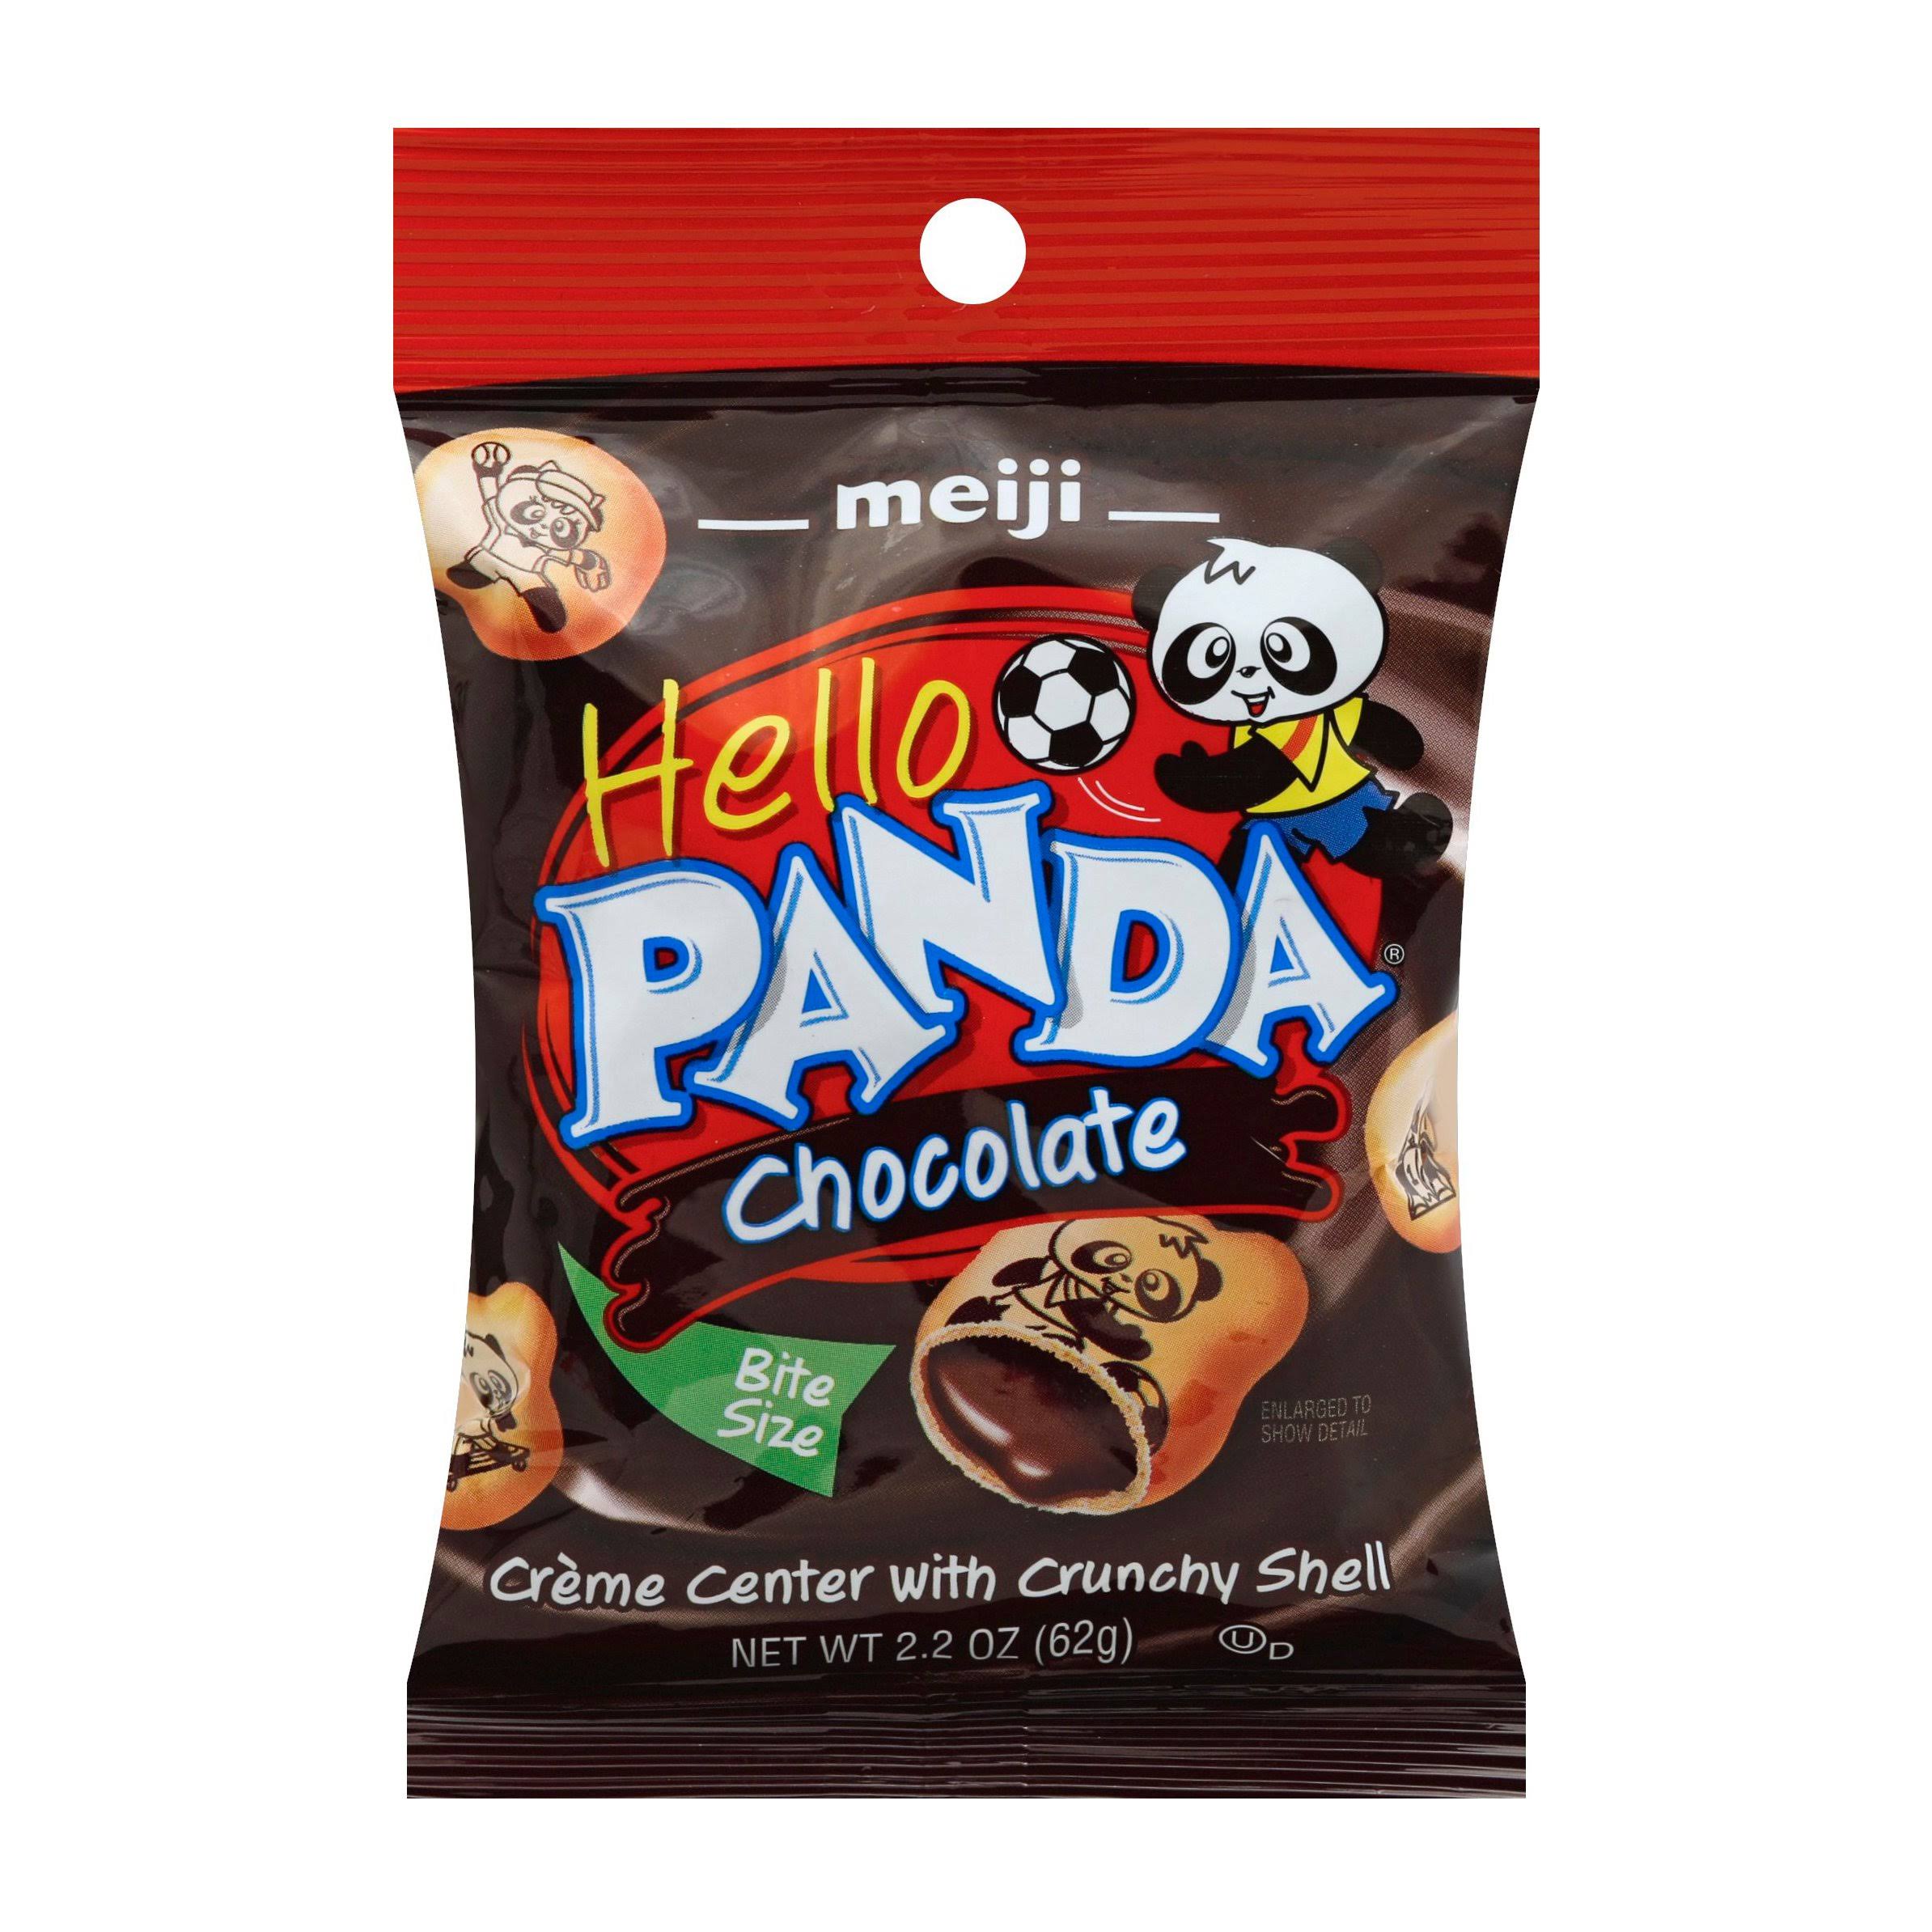 Hello Panda Biscuits, Chocolate, Bite-Size - 2.2 oz